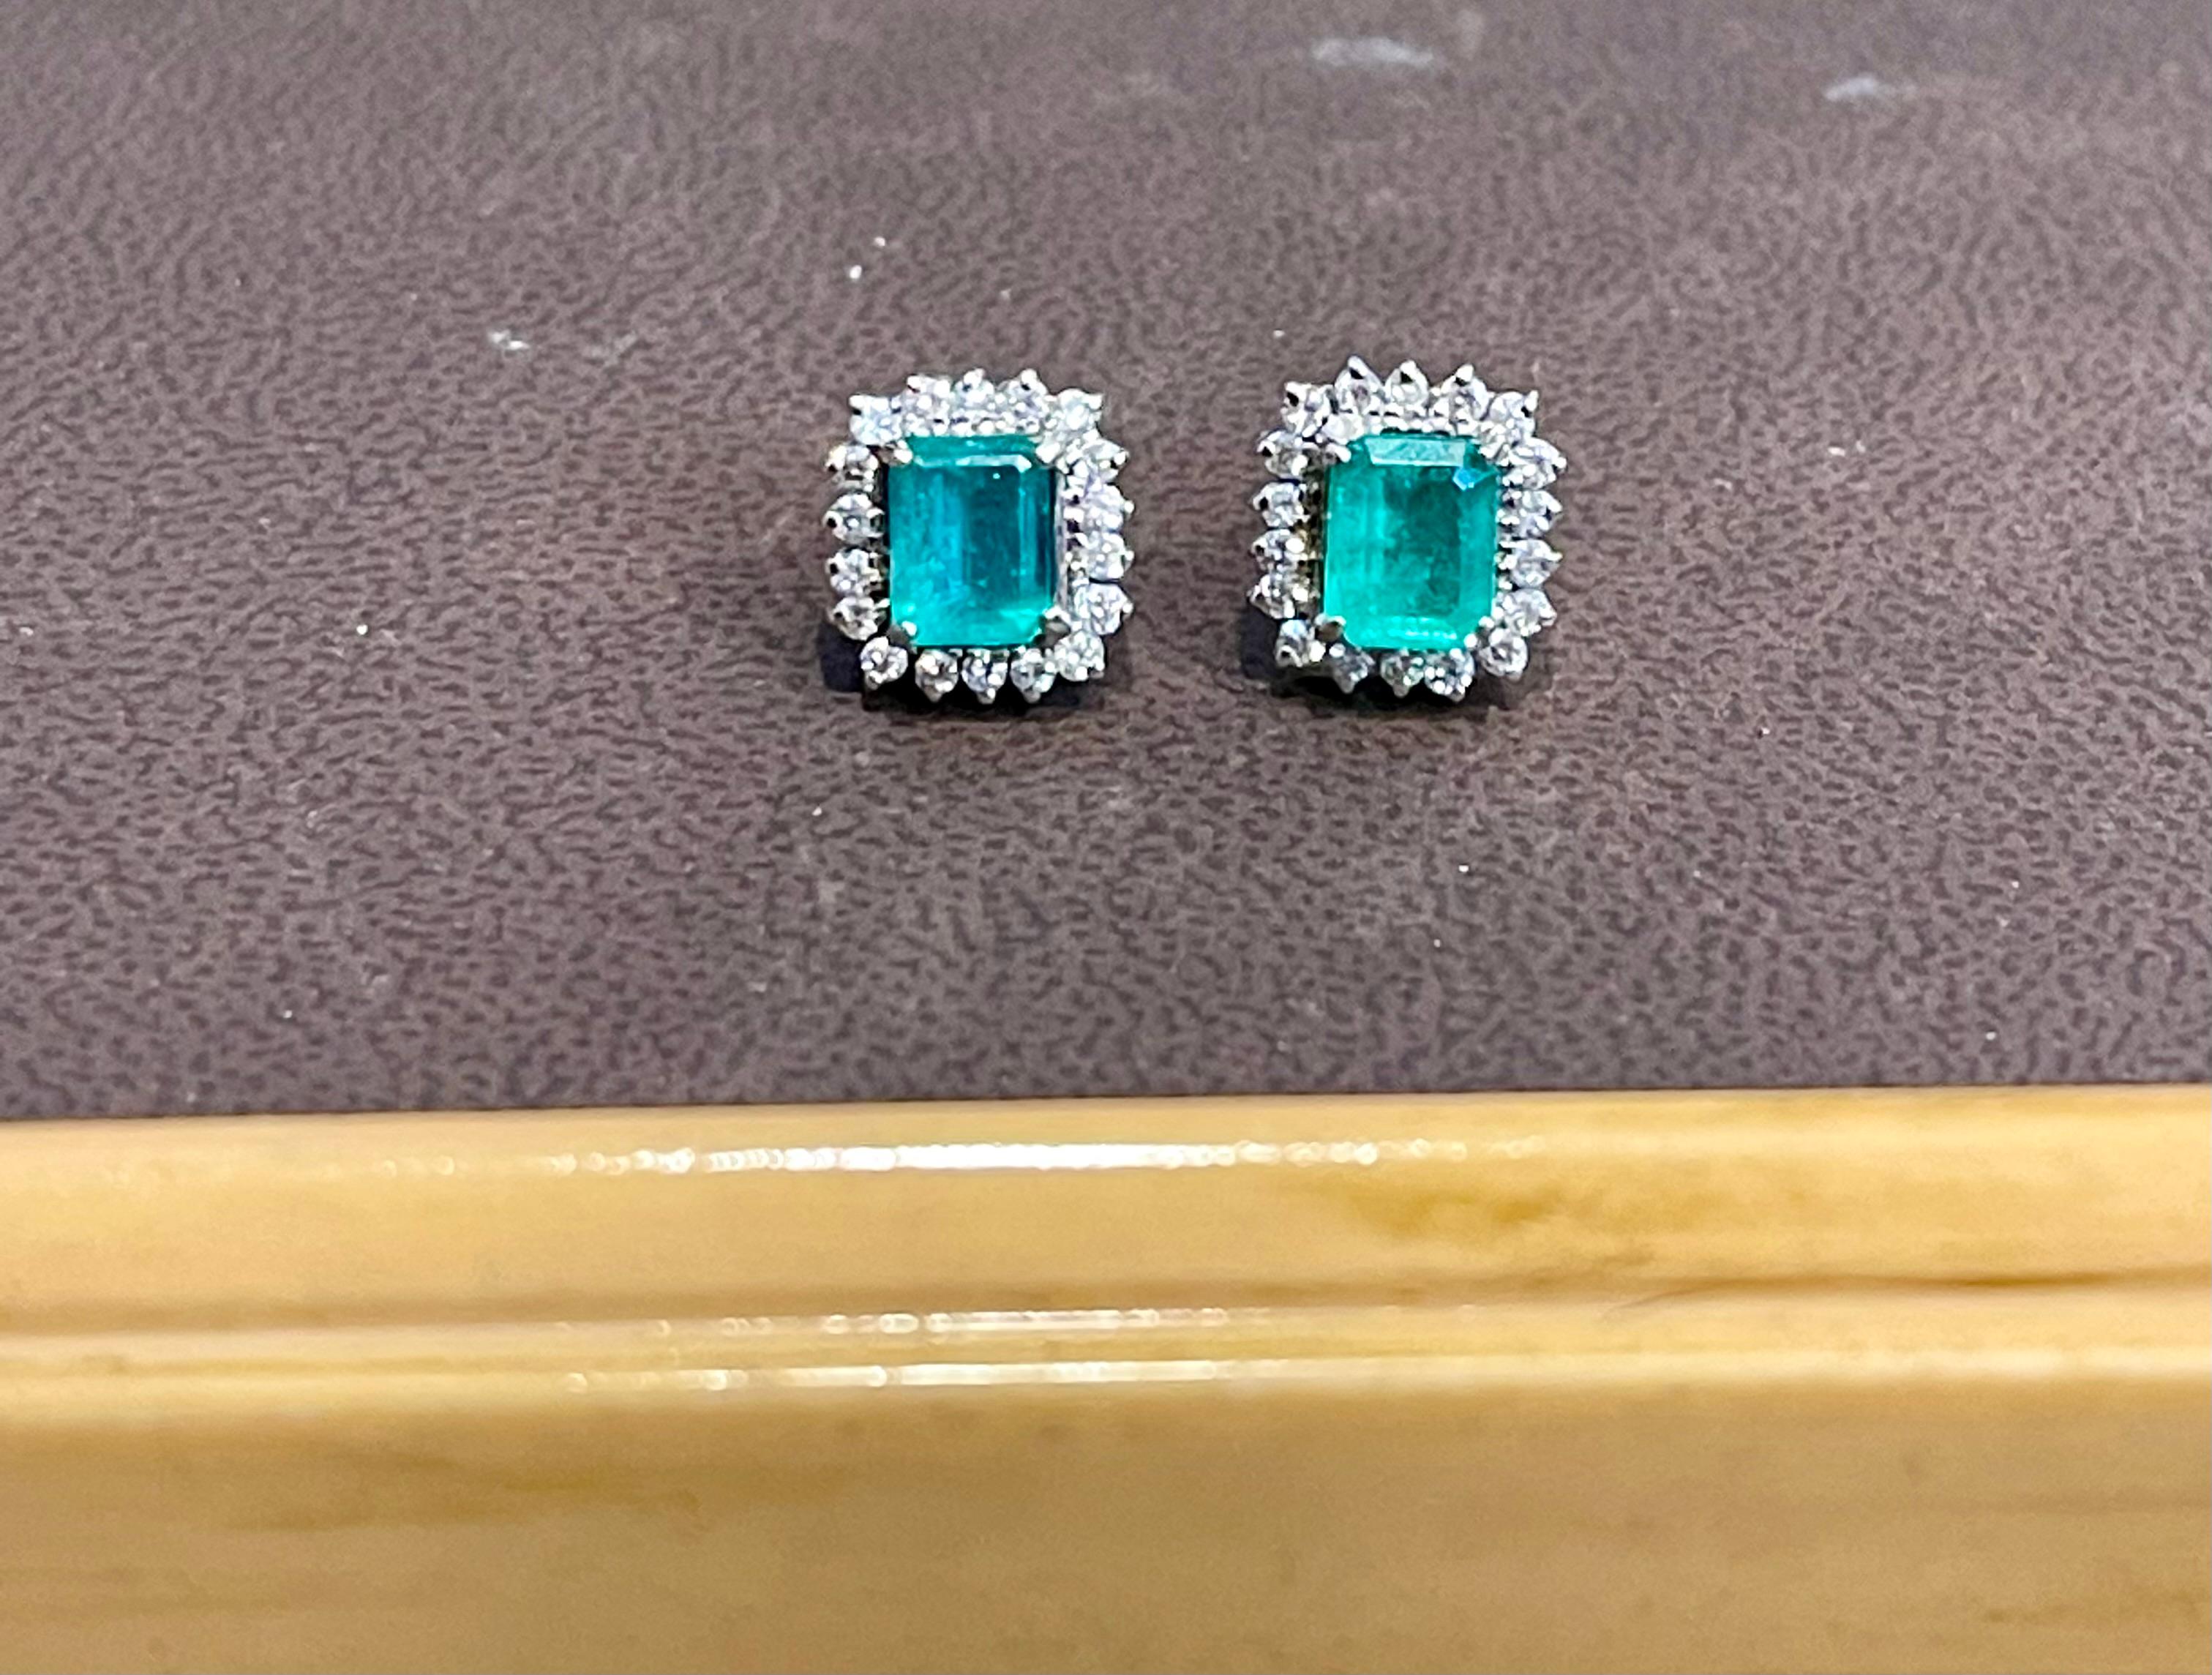 2. 25 Ct Colombian Emerald Cut Emerald & Diamond Earrings 18 Karat White Gold 2